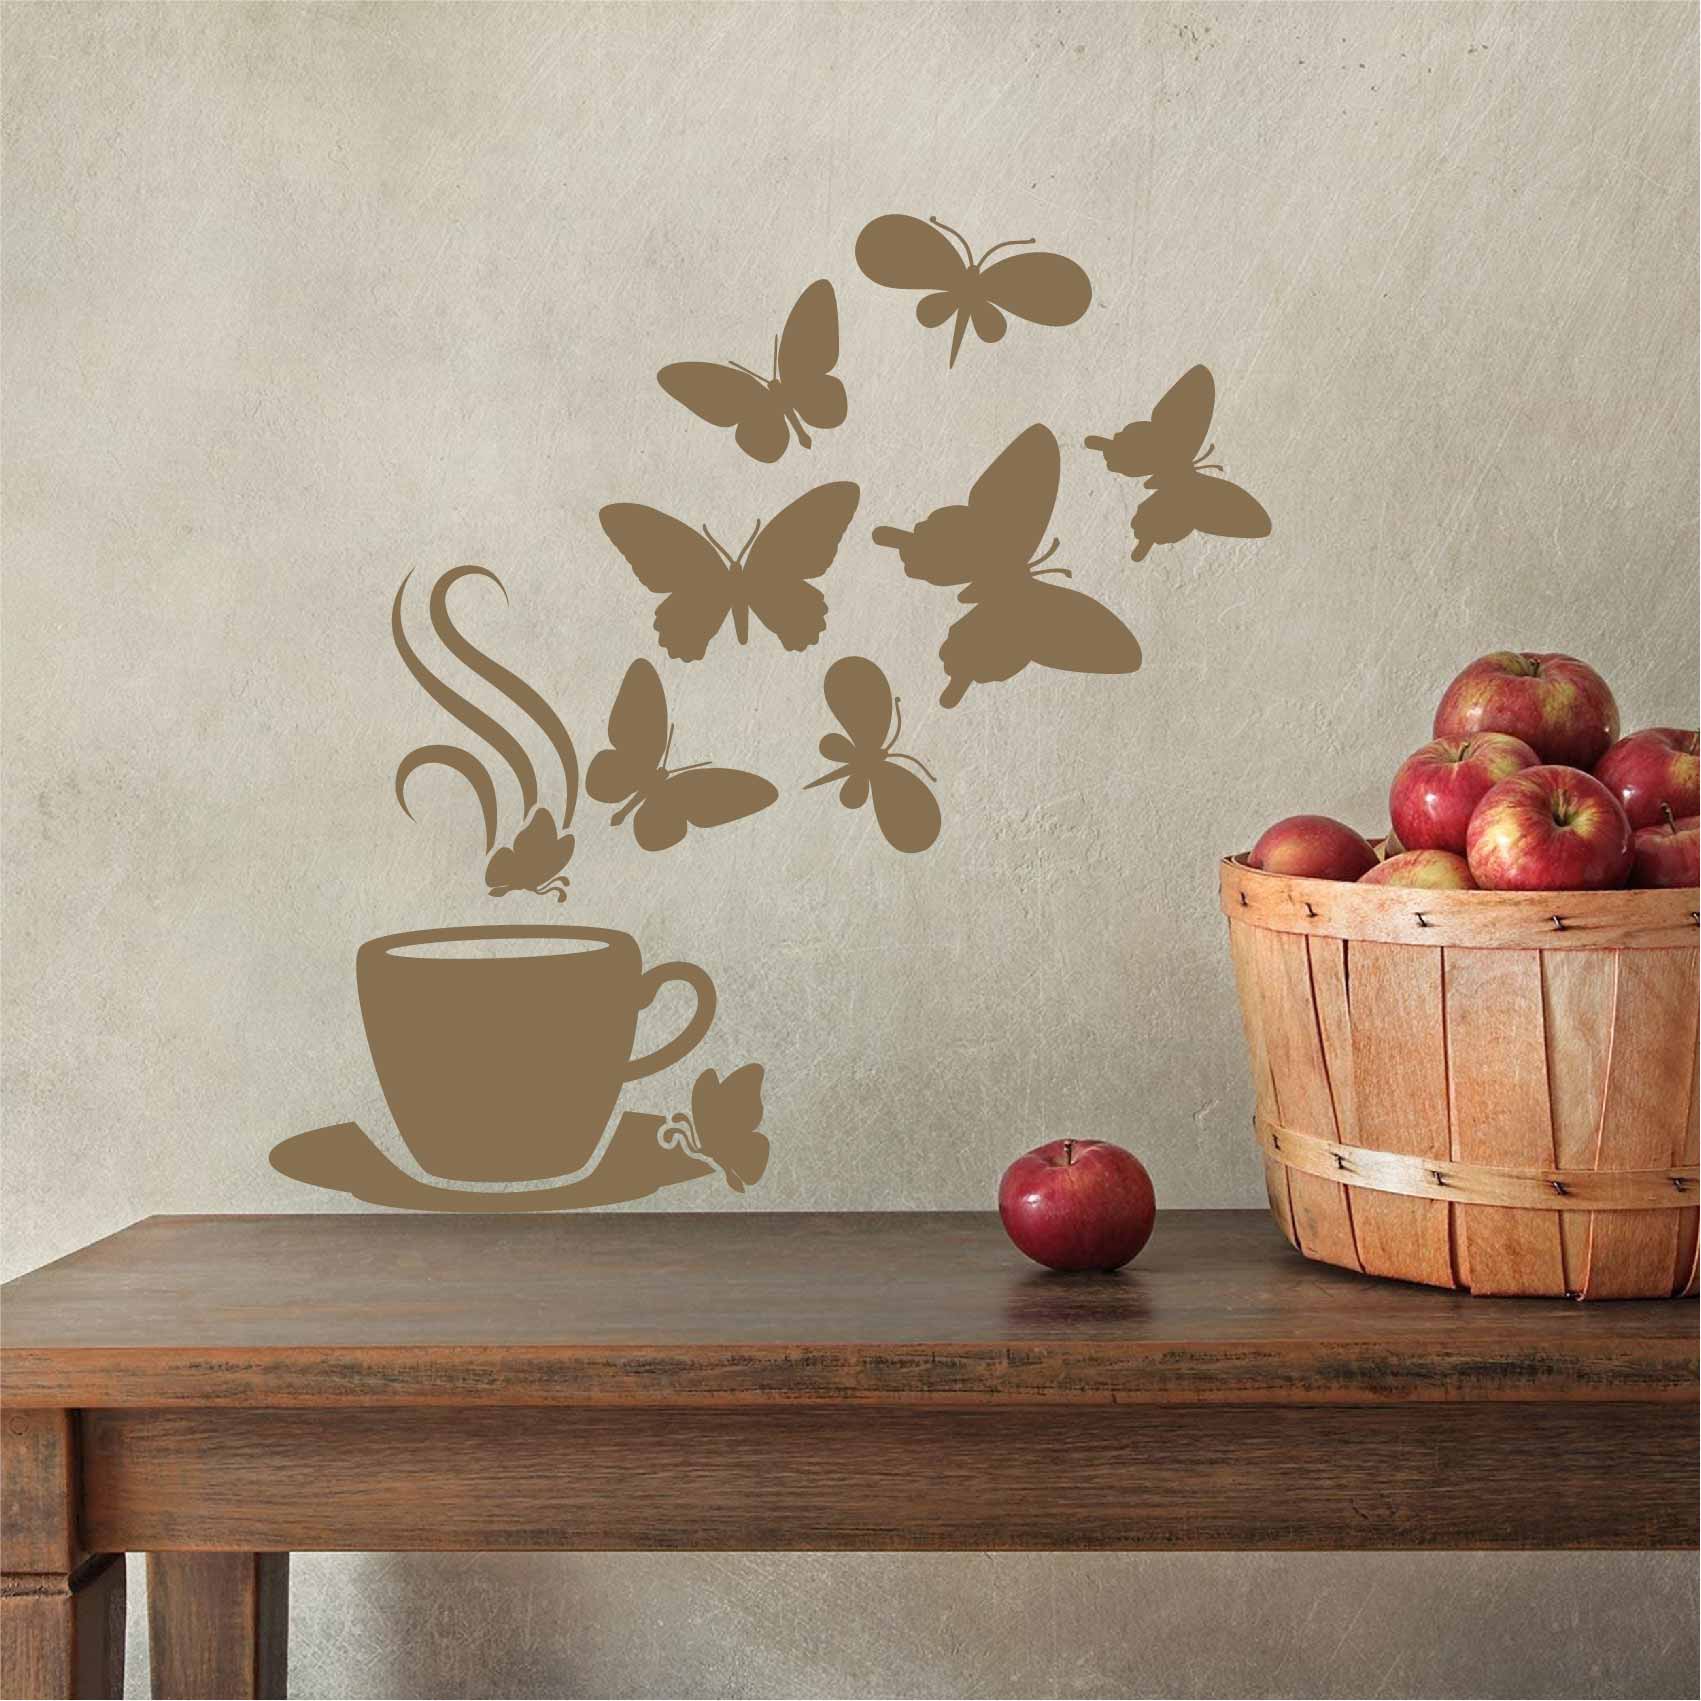 stickers-tasse-cafe-ref26cafe-autocollant-muraux-café-sticker-mural-cuisine-coffee-deco-salon-table